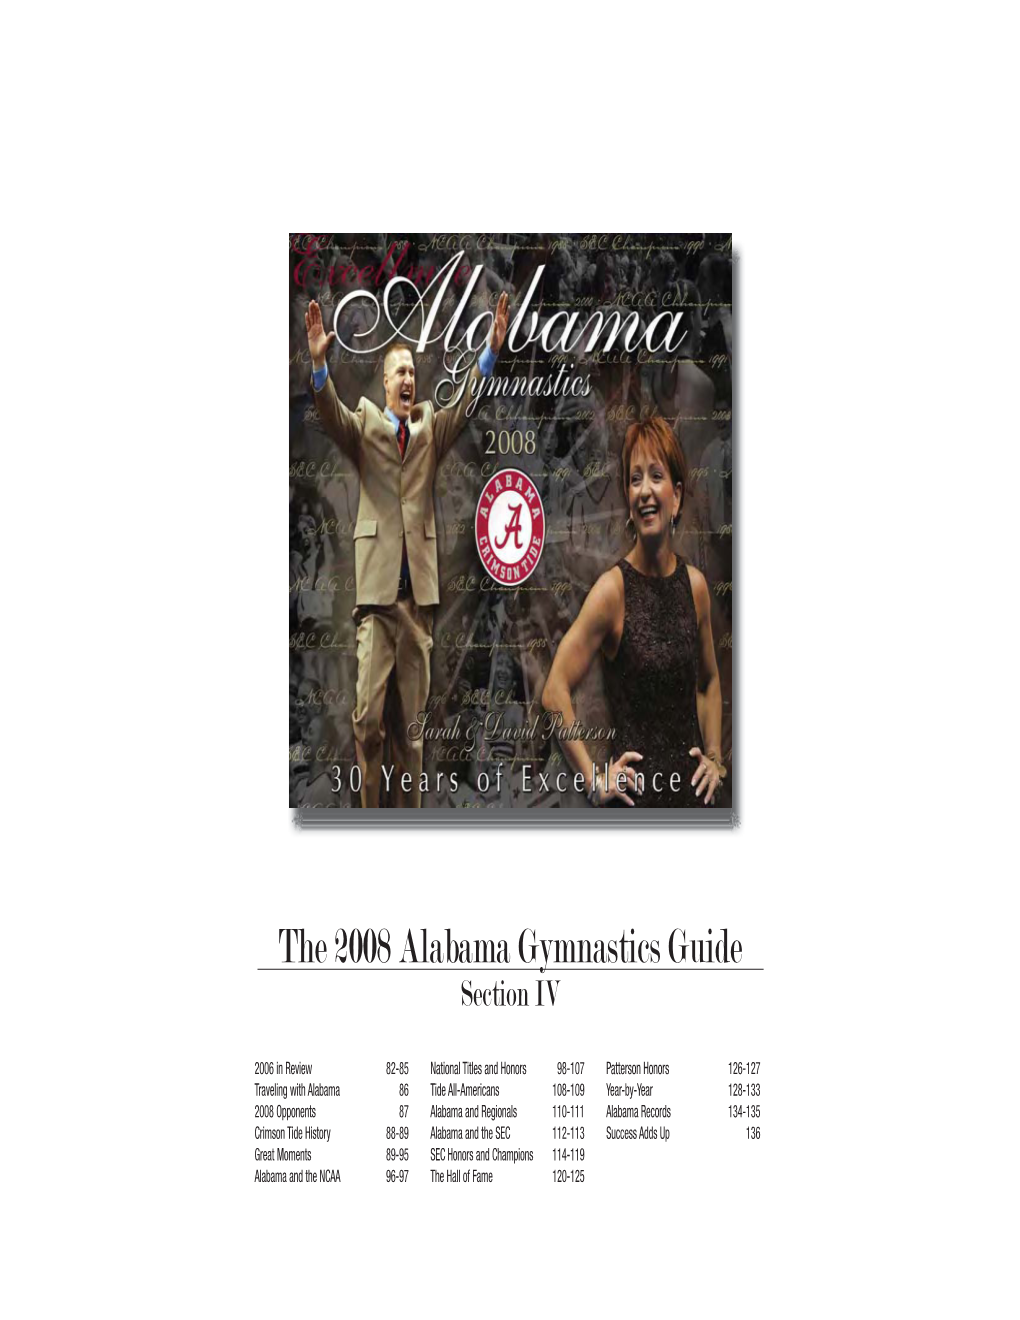 The 2008 Alabama Gymnastics Guide Section IV